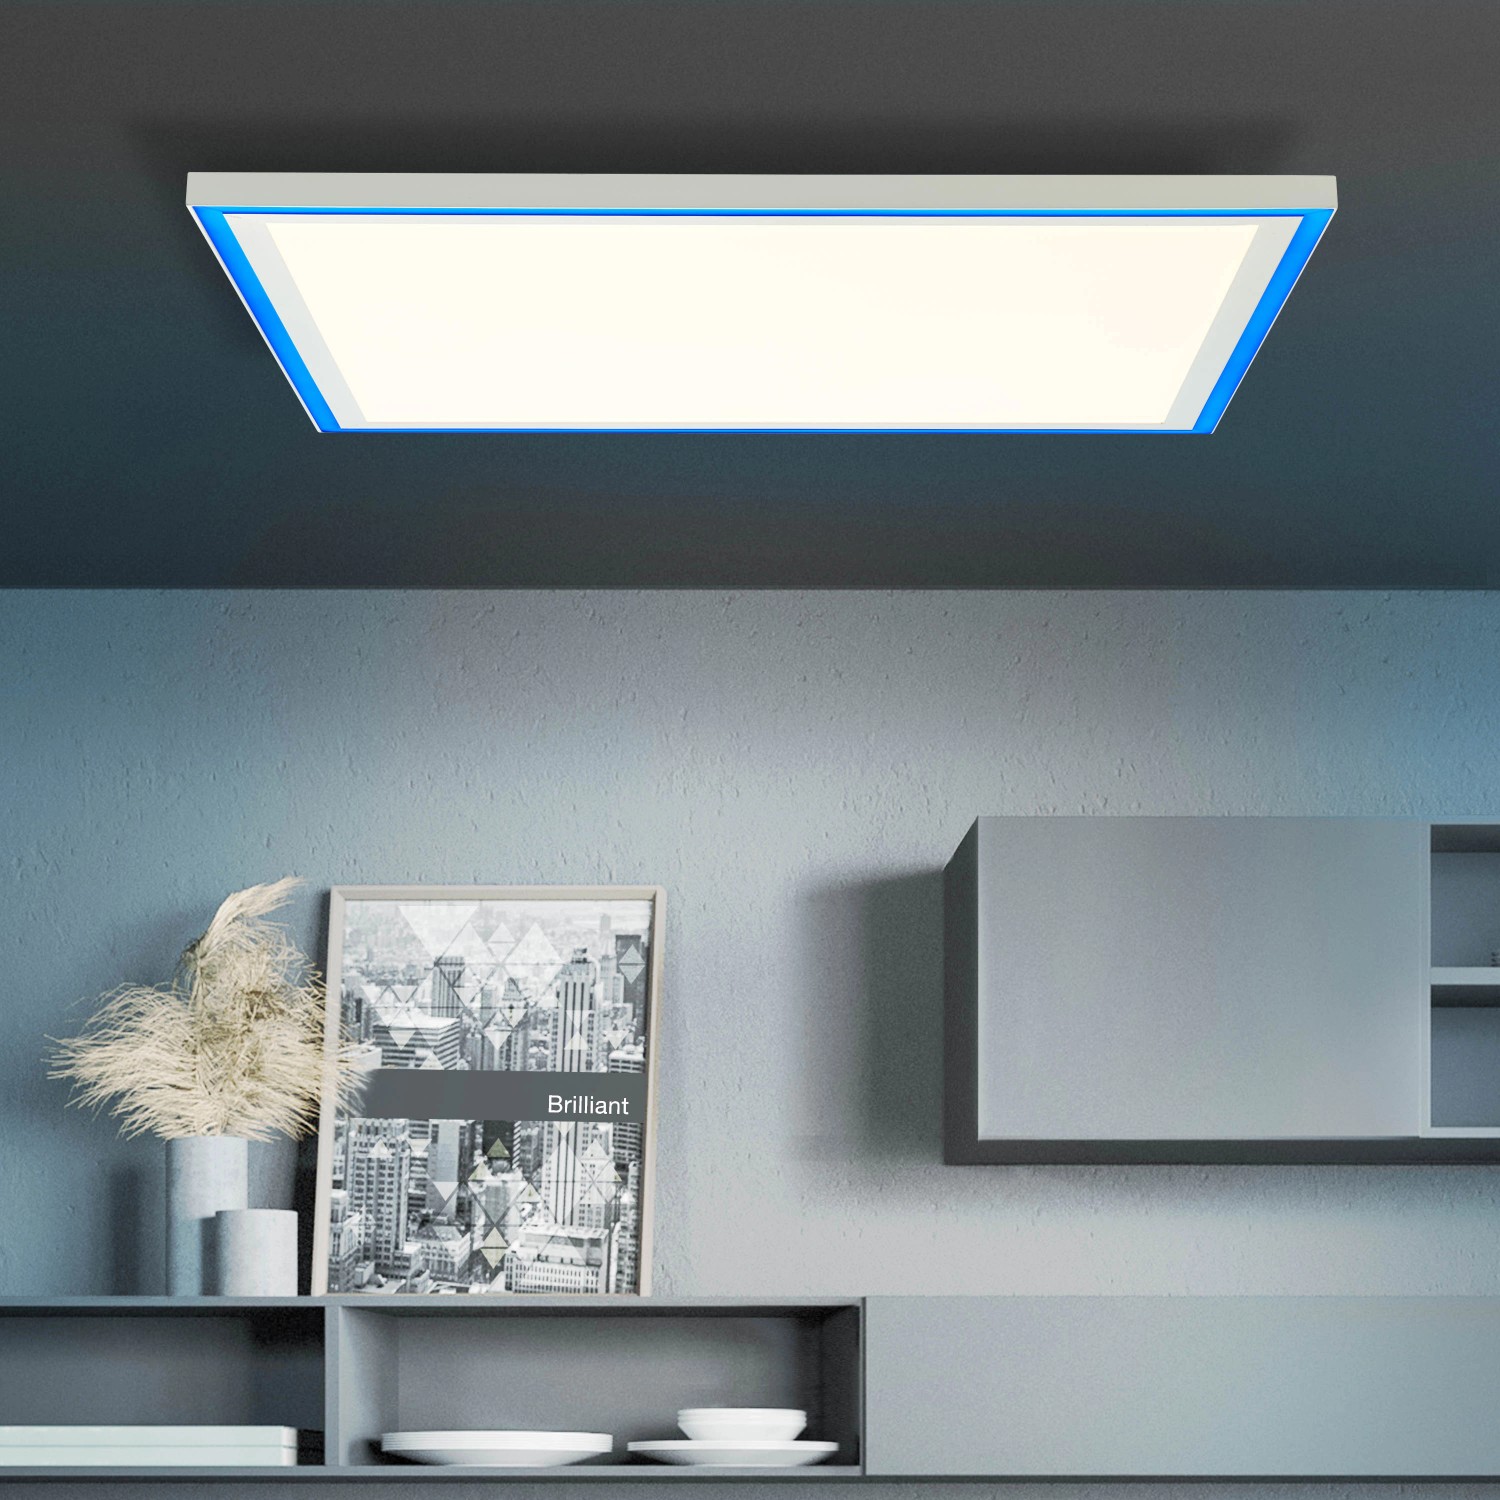 Brilliant LED-Deckenaufbau-Paneel Lanette 60 cm x 60 cm Weiß kaufen bei OBI